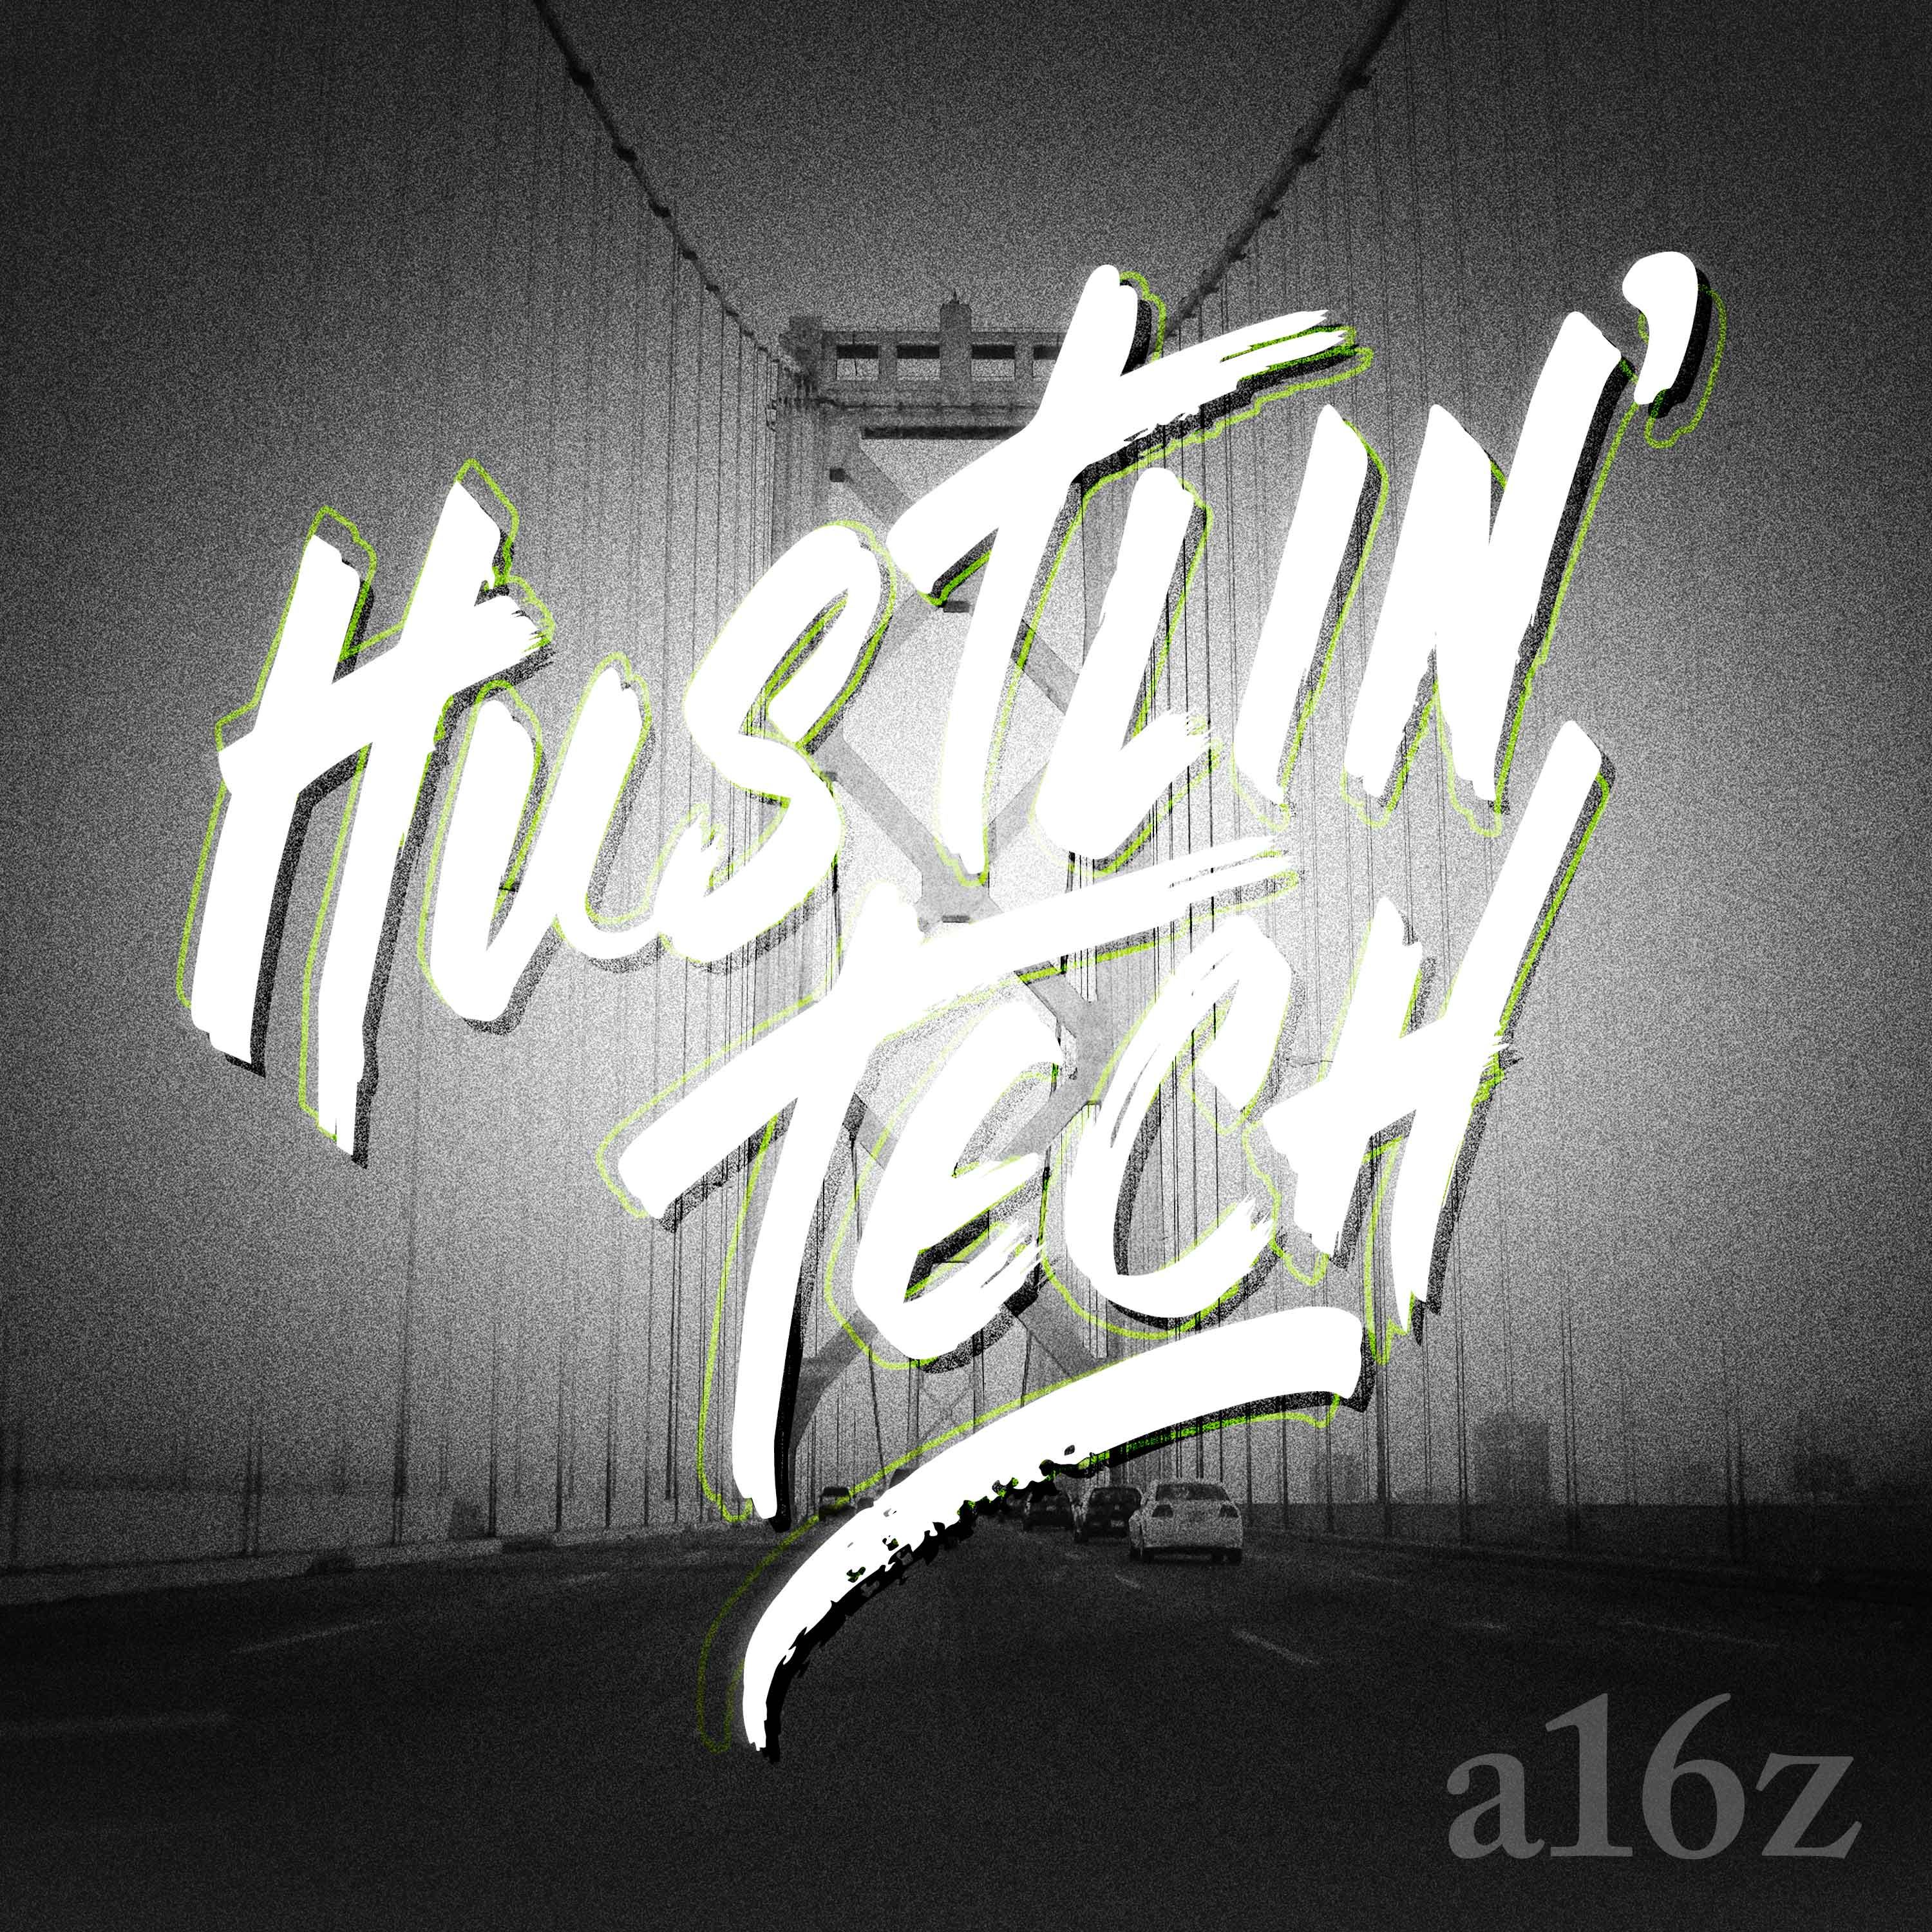 Introducing Hustlin' Tech